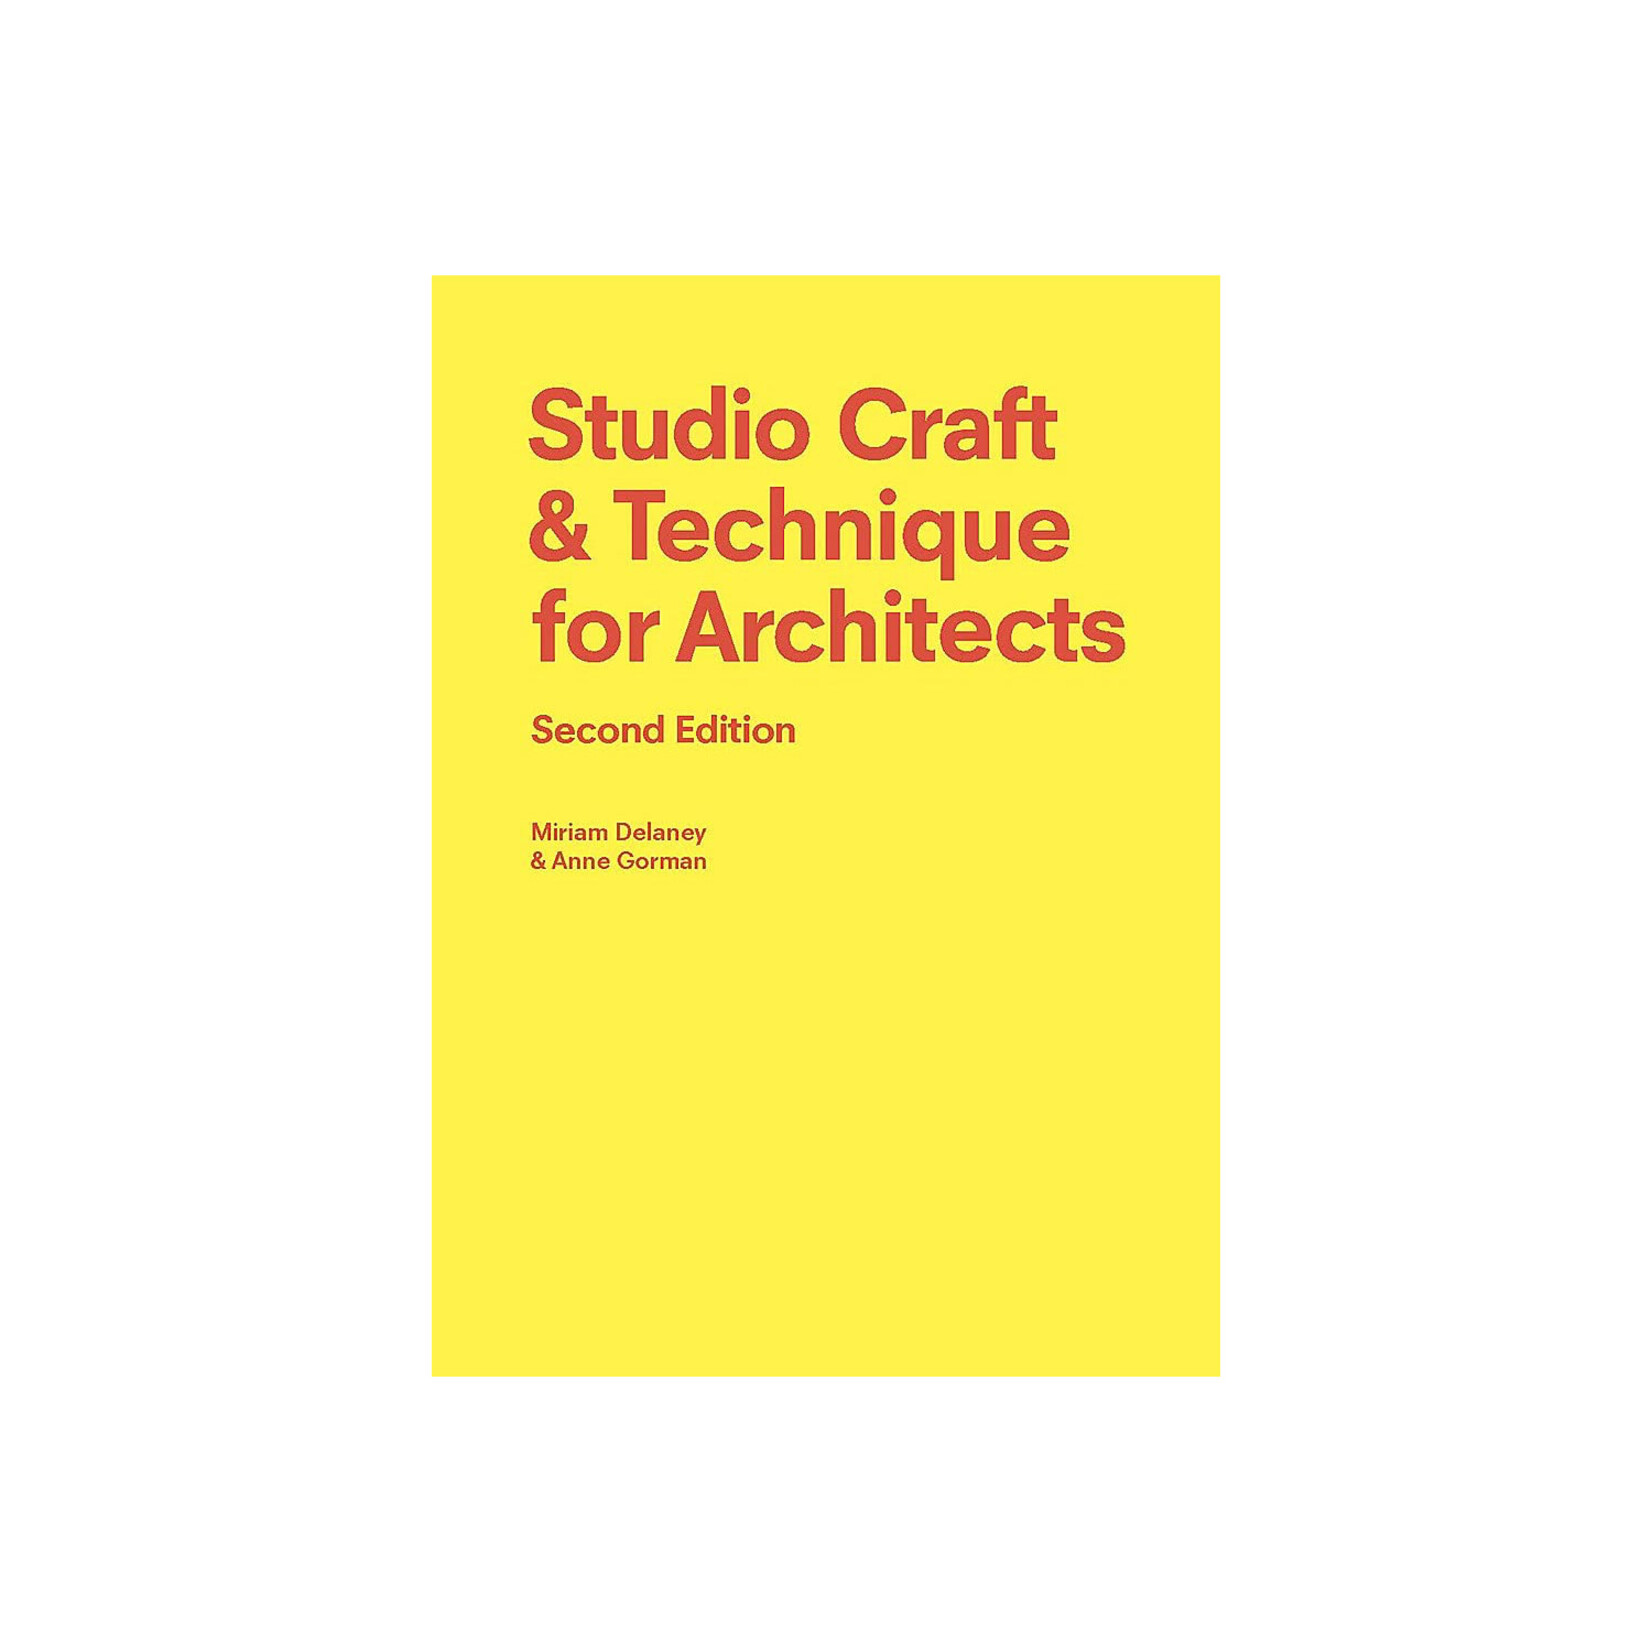 Studio Craft & Technique for Architects